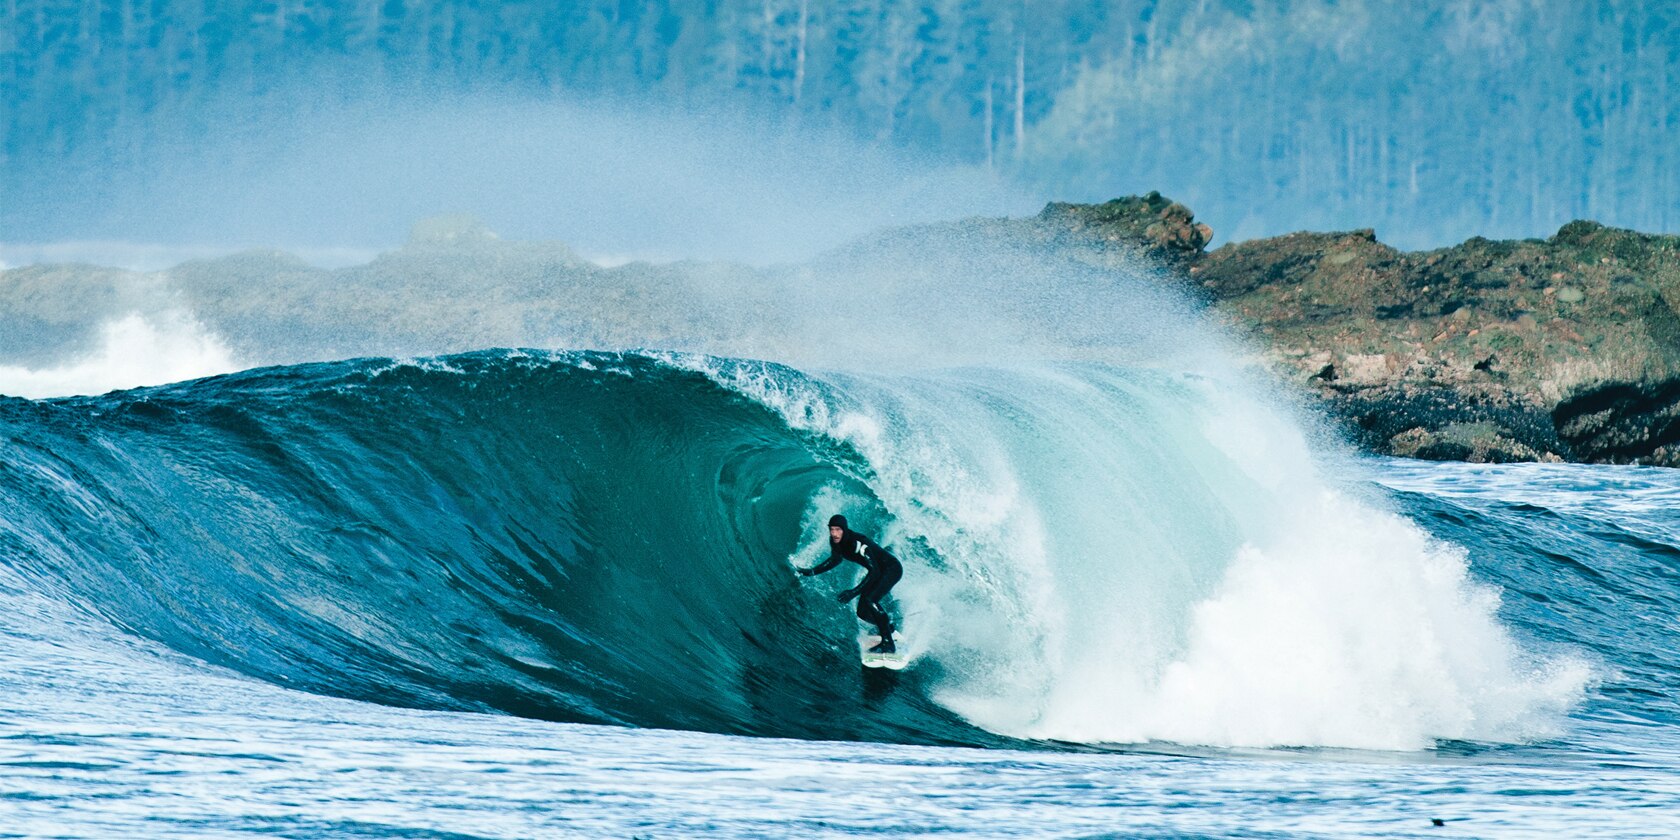 man wearing black wet suit surfing a large wave